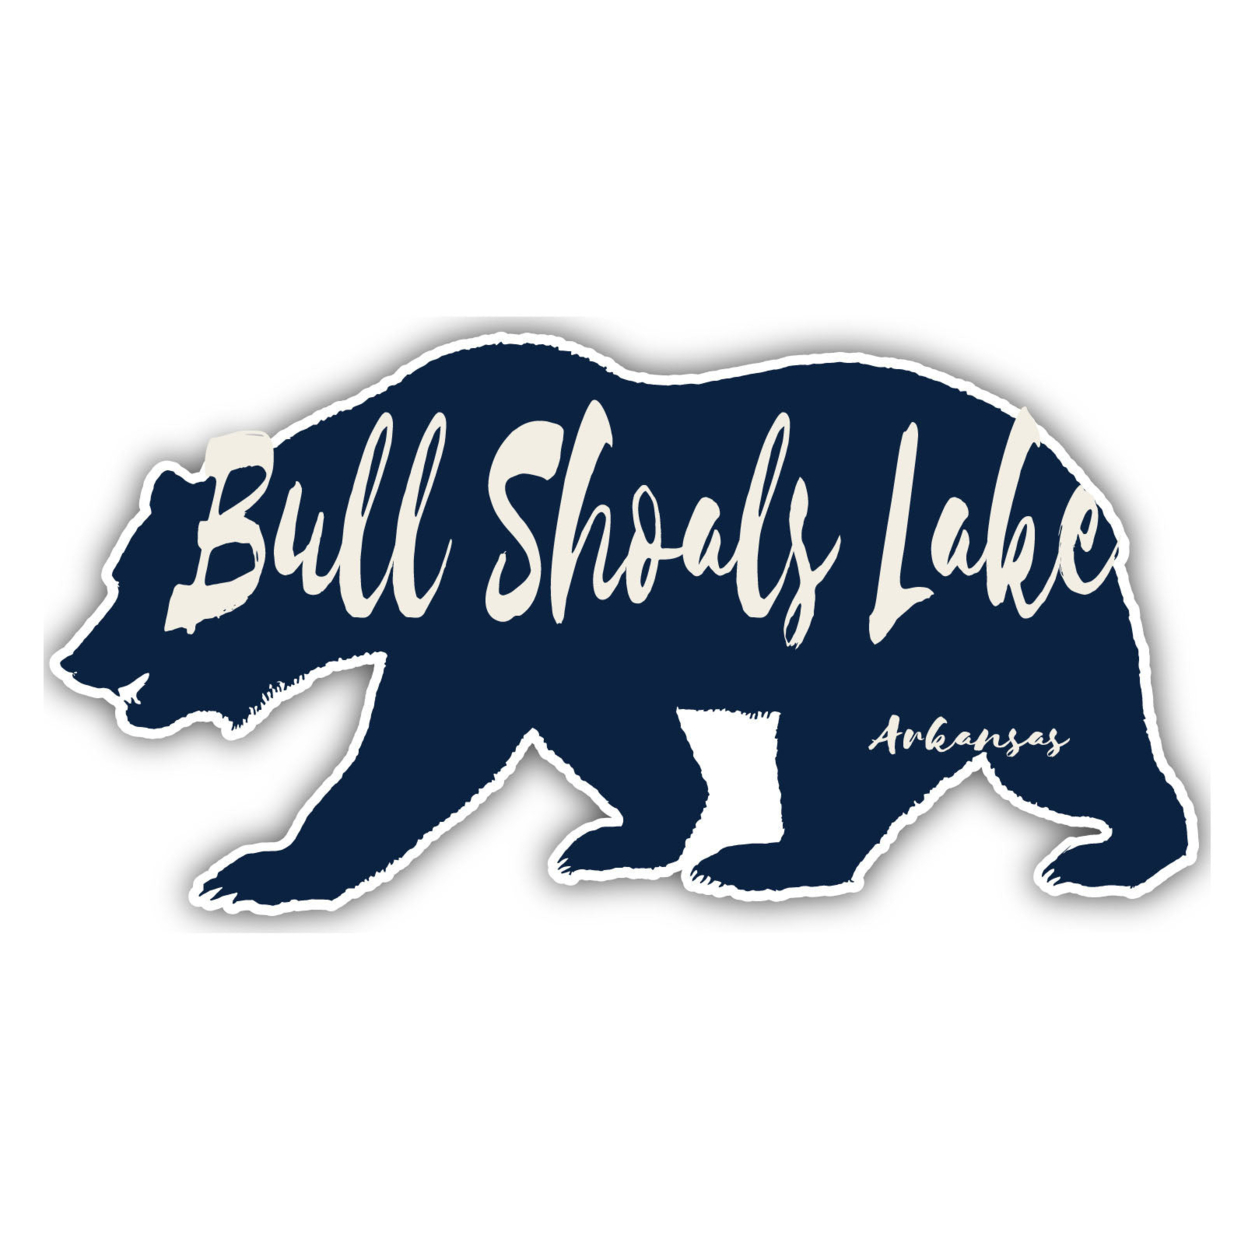 Bull Shoals Lake Arkansas Souvenir Decorative Stickers (Choose Theme And Size) - Single Unit, 8-Inch, Adventures Awaits